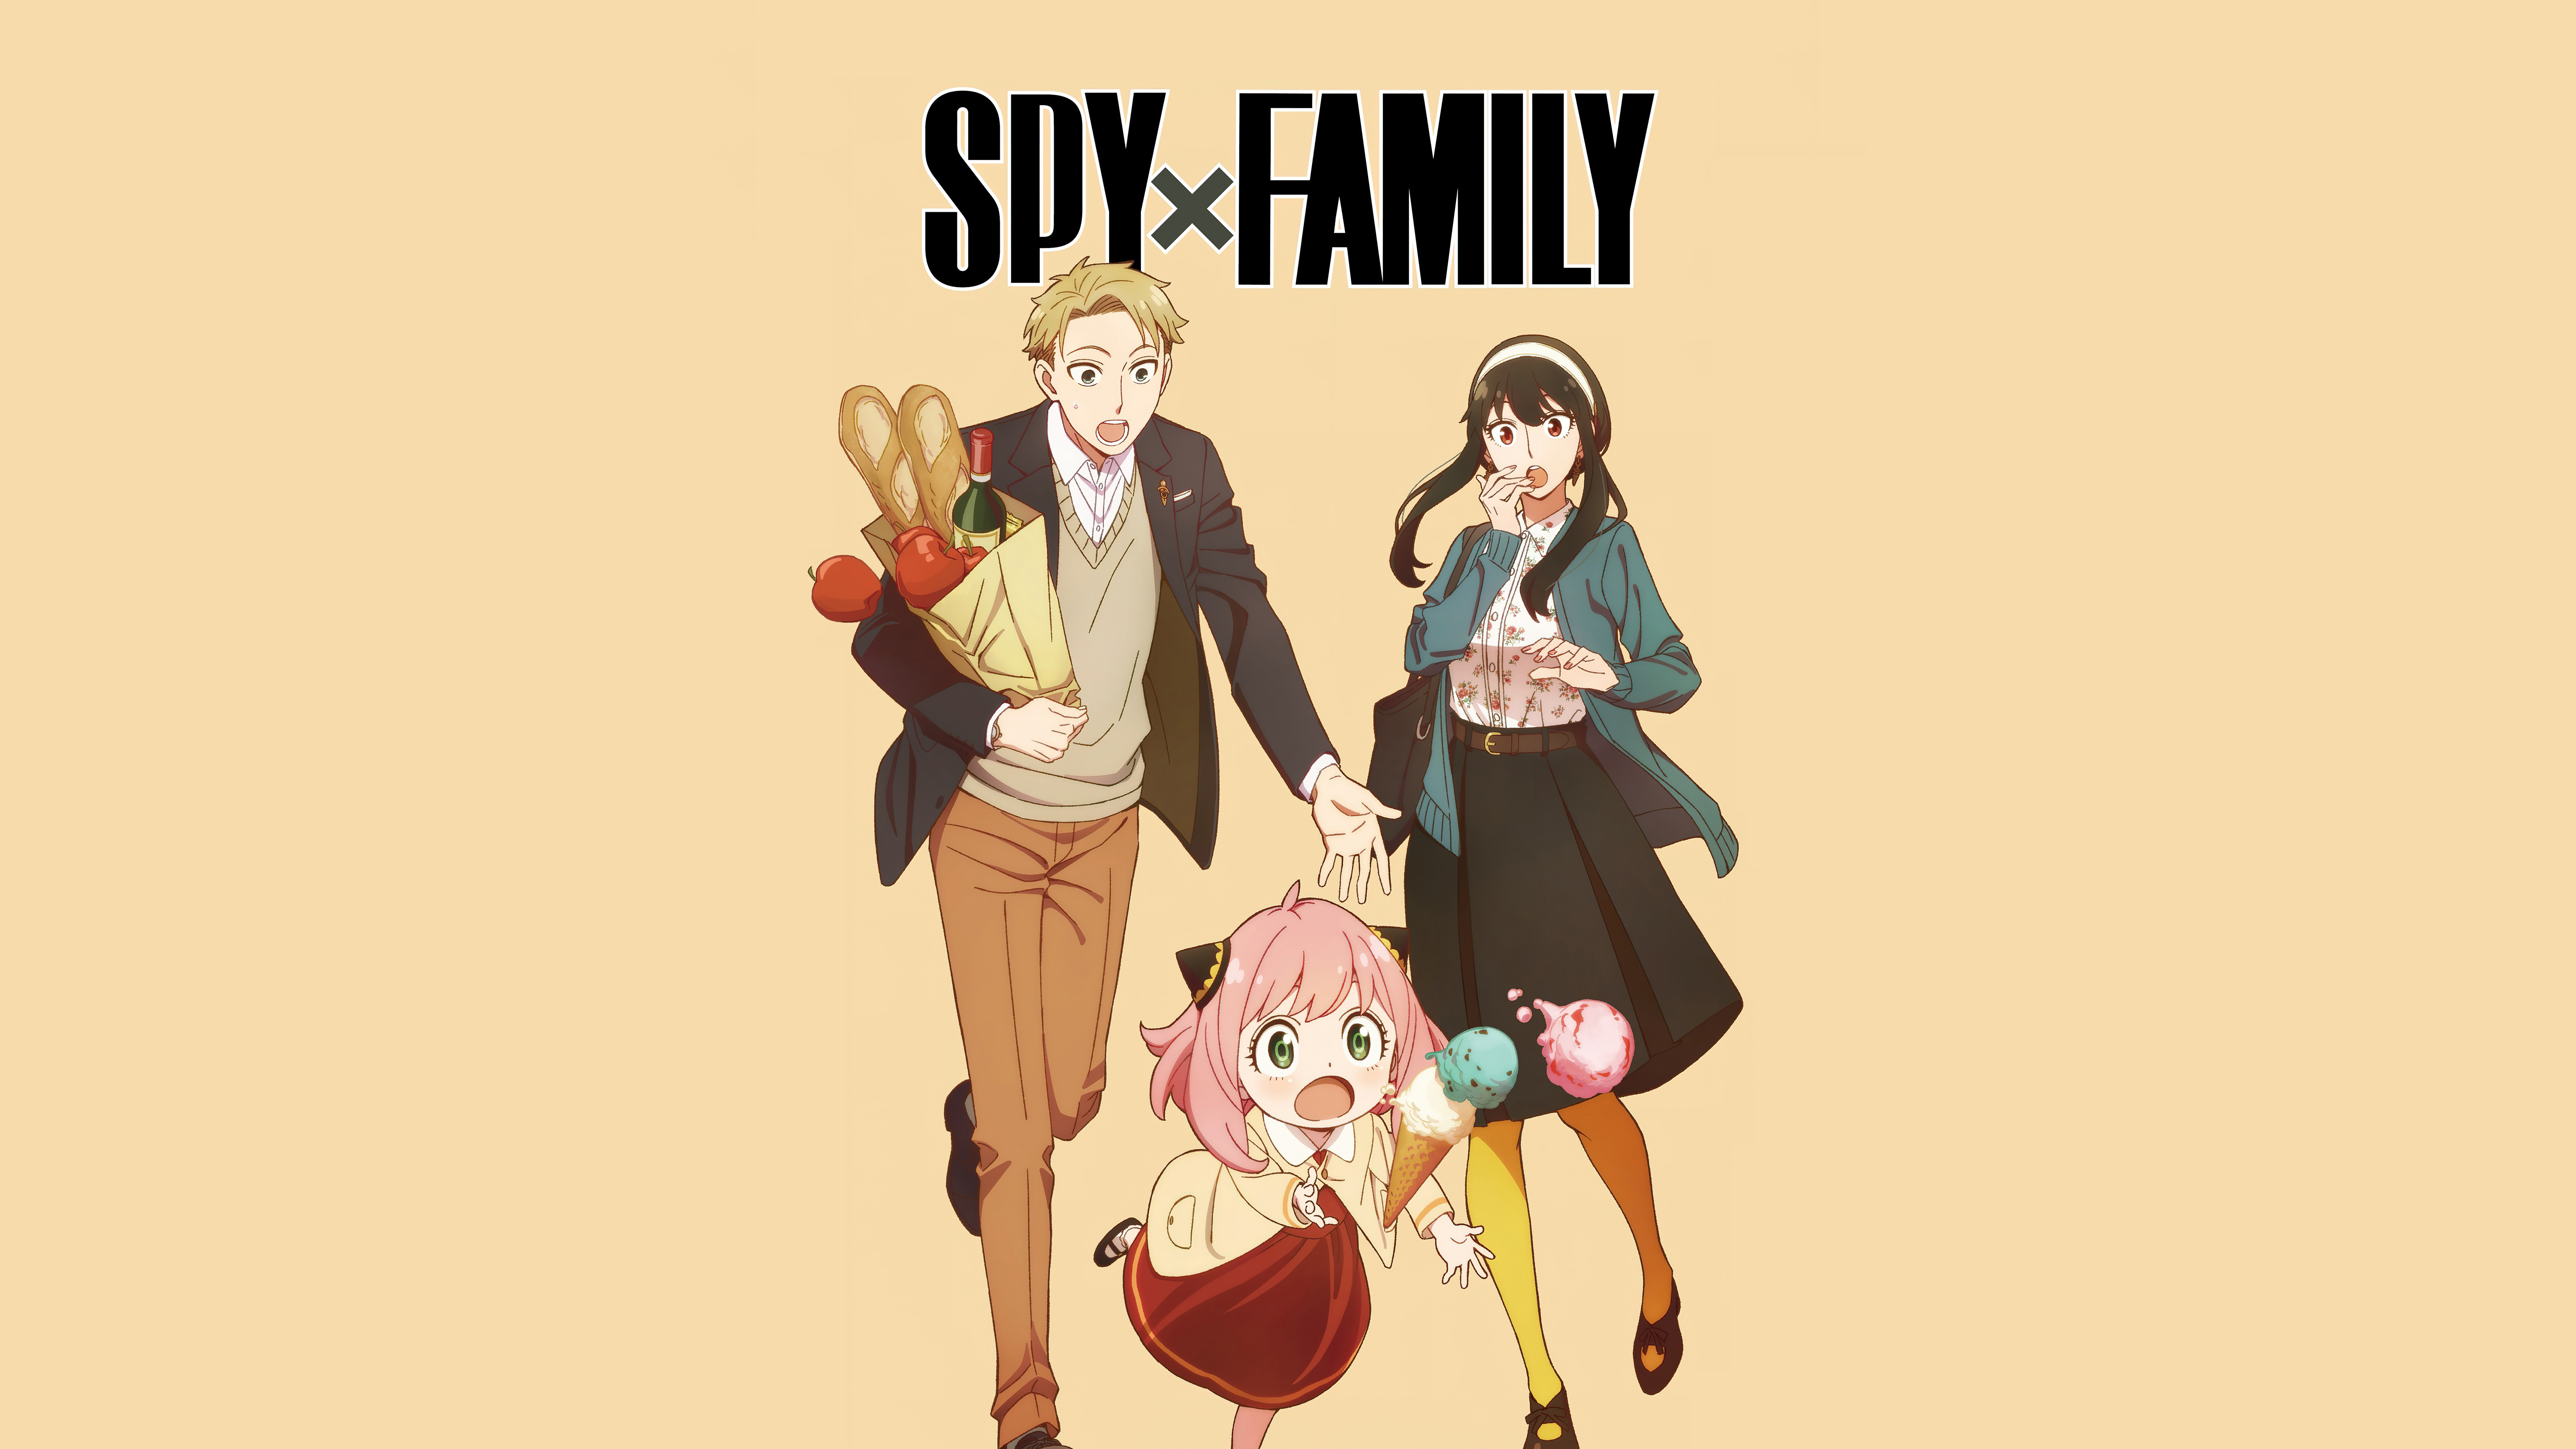 Spy x Family Anime Wallpaper 8k Ultra HD ID:9907